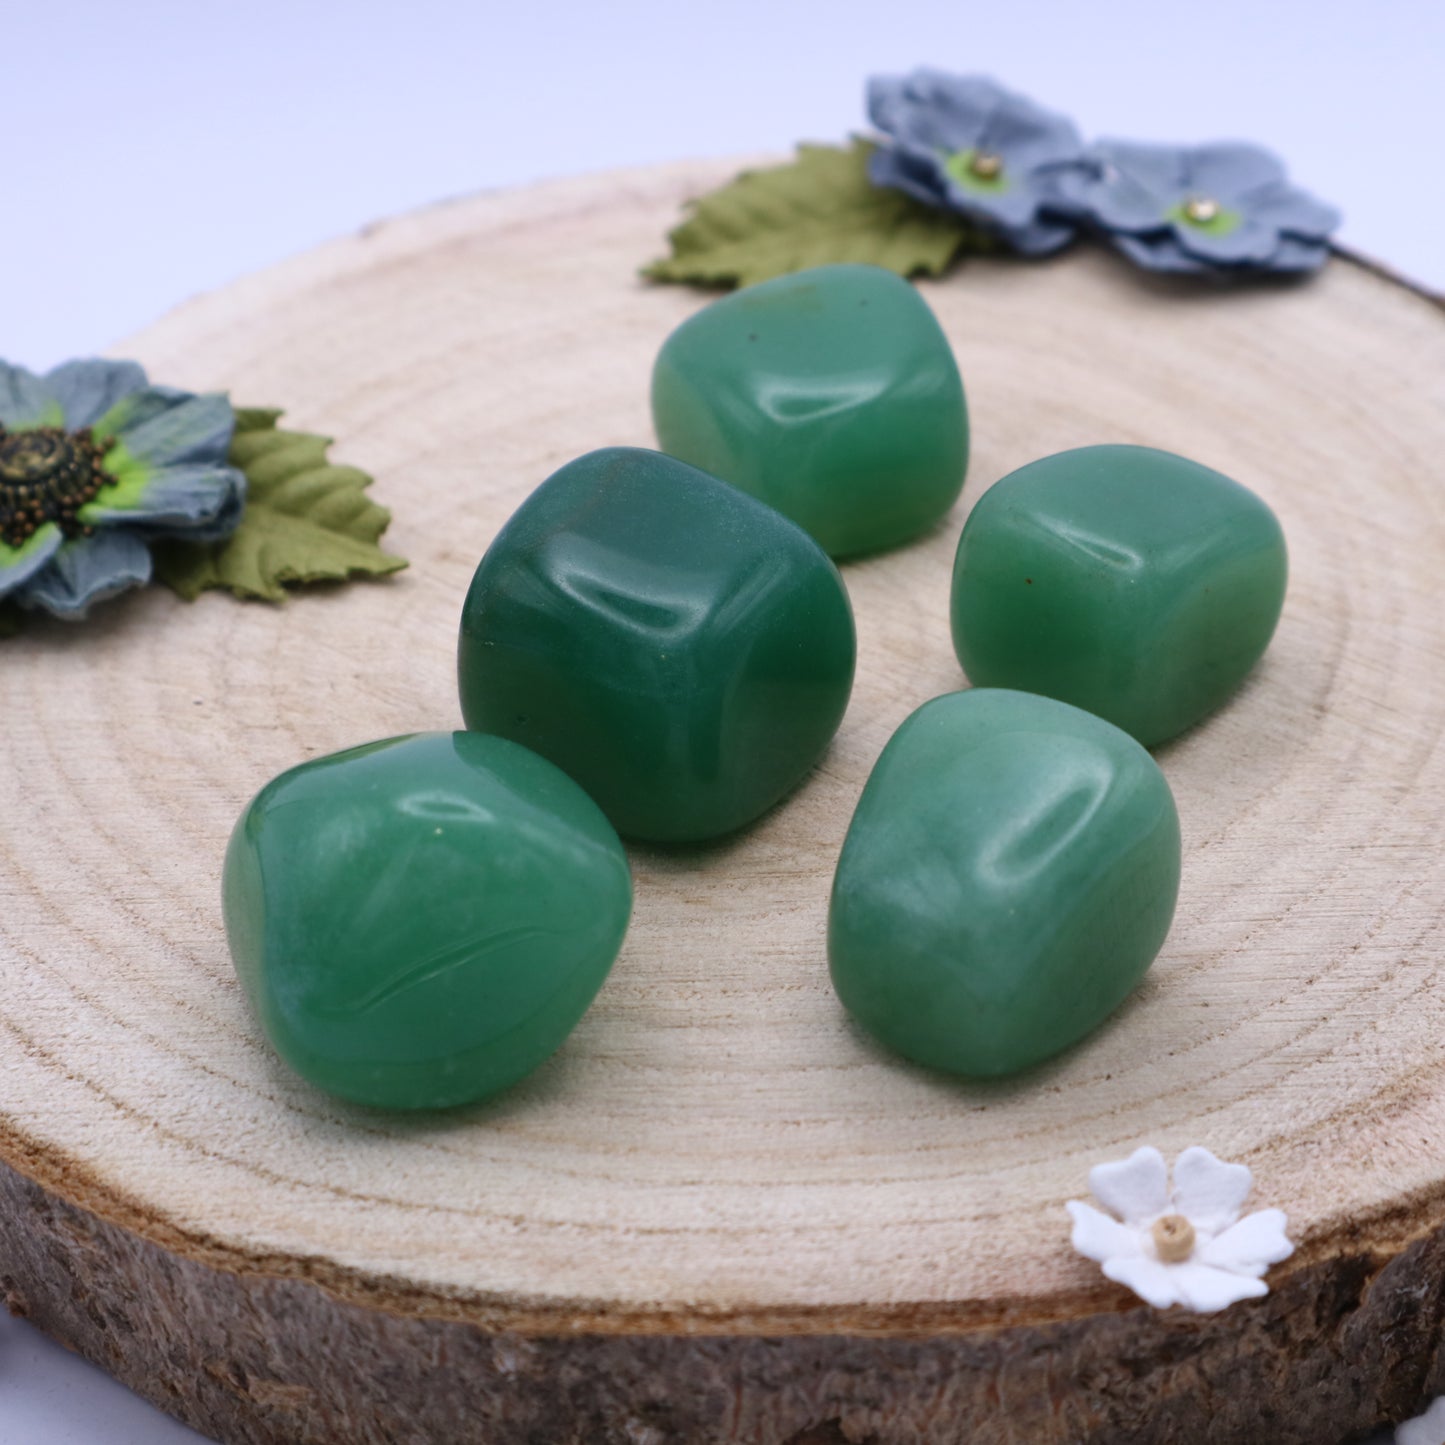 Five pieces of Green Aventurine crystals